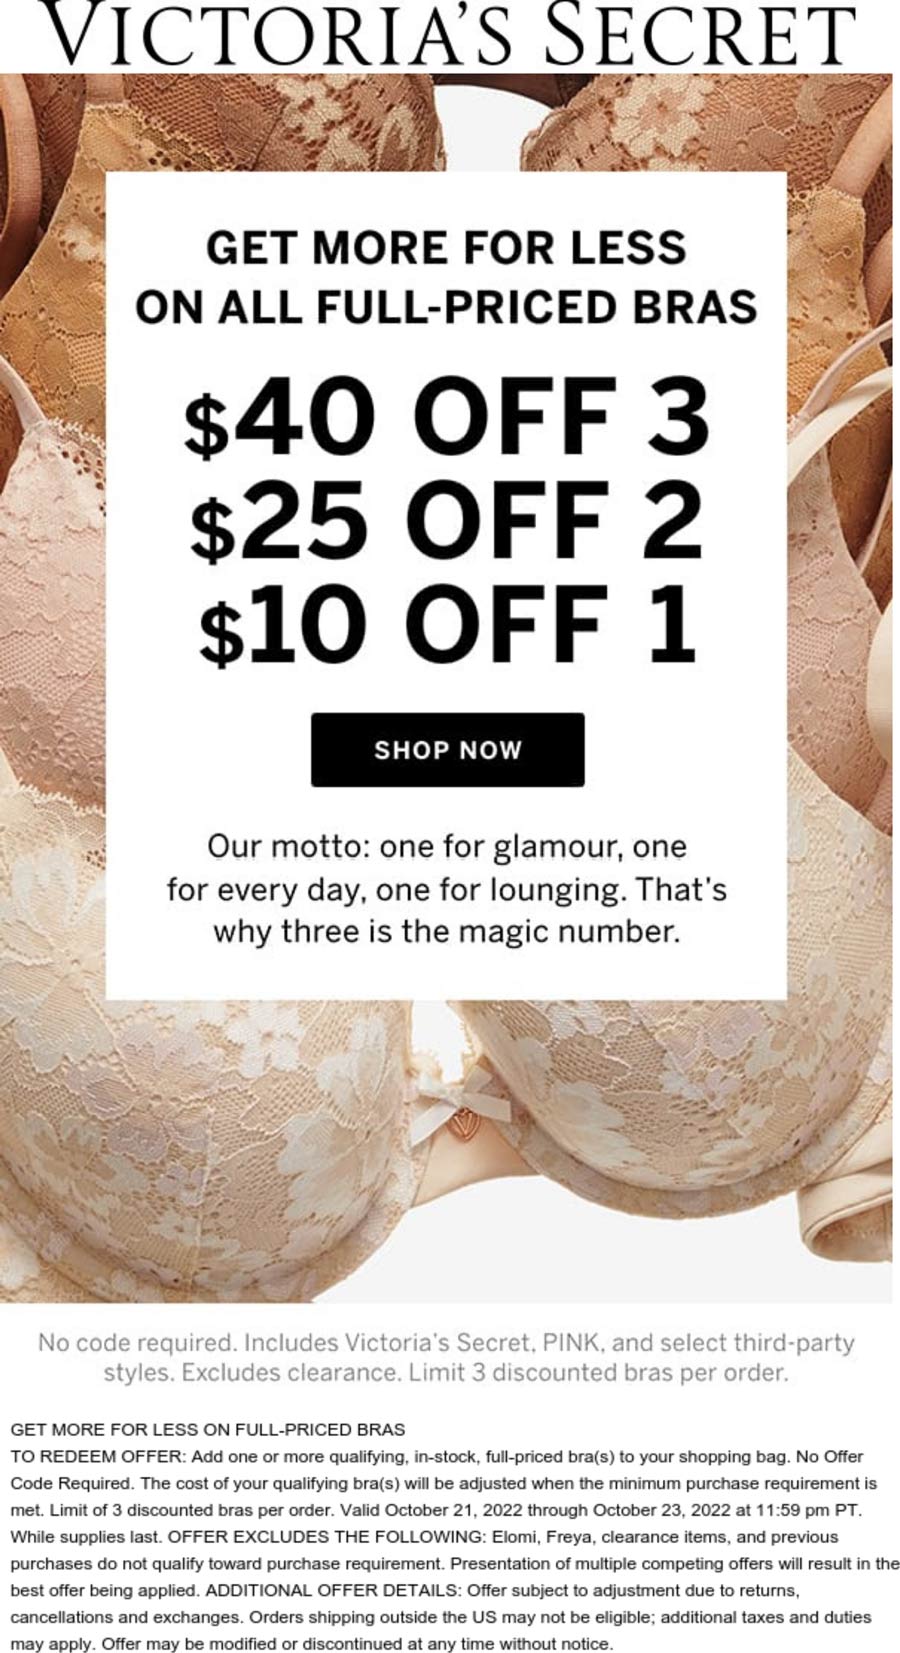 Victorias Secret stores Coupon  $10-$40 off bras at Victorias Secret #victoriassecret 